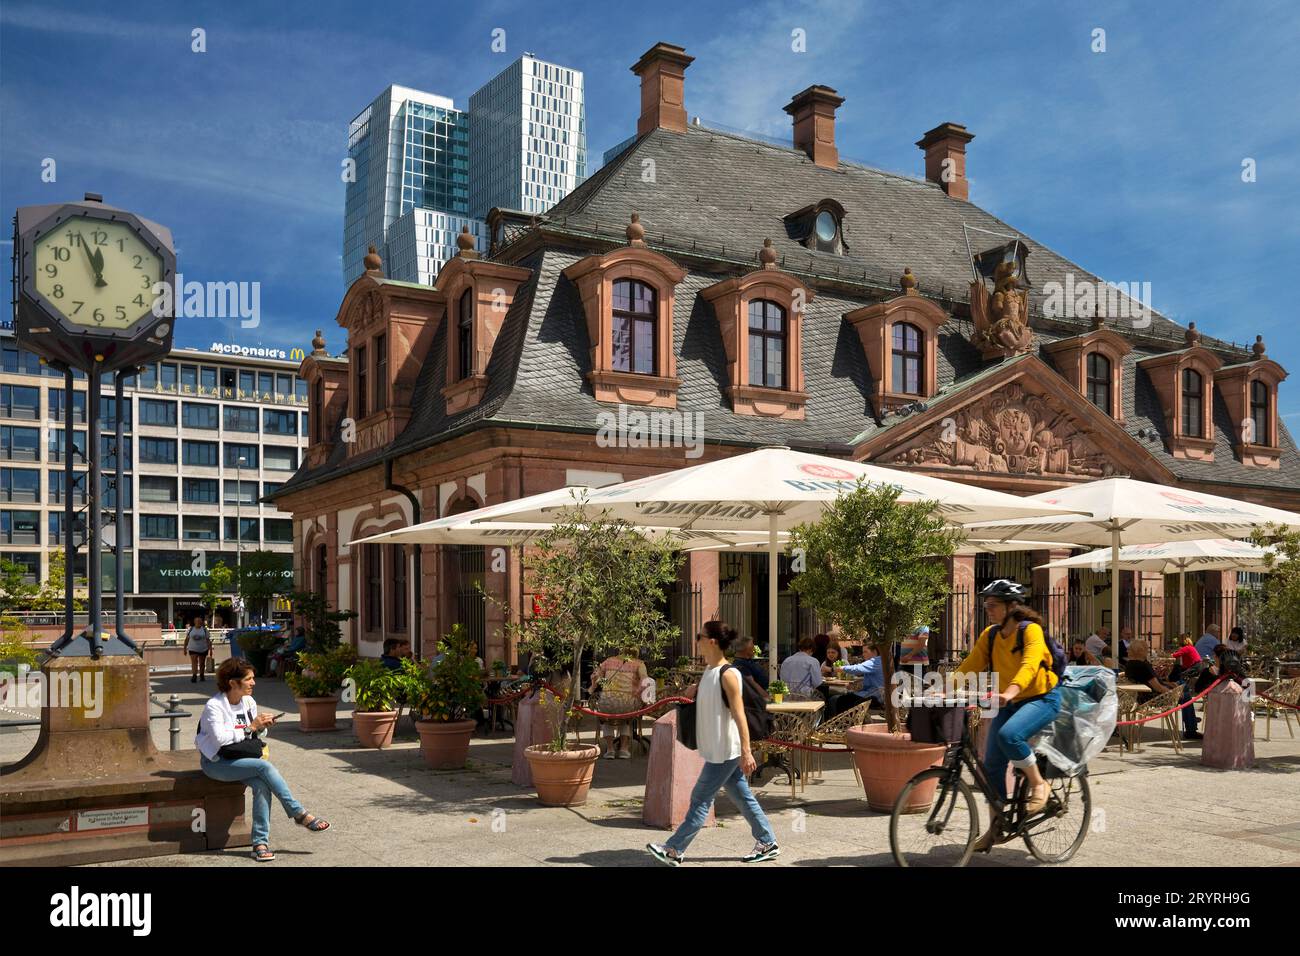 Barocke Hauptwache, heute cafÃ, Altstadt, Frankfurt am Main, Hessen, Deutschland, Europa Stockfoto